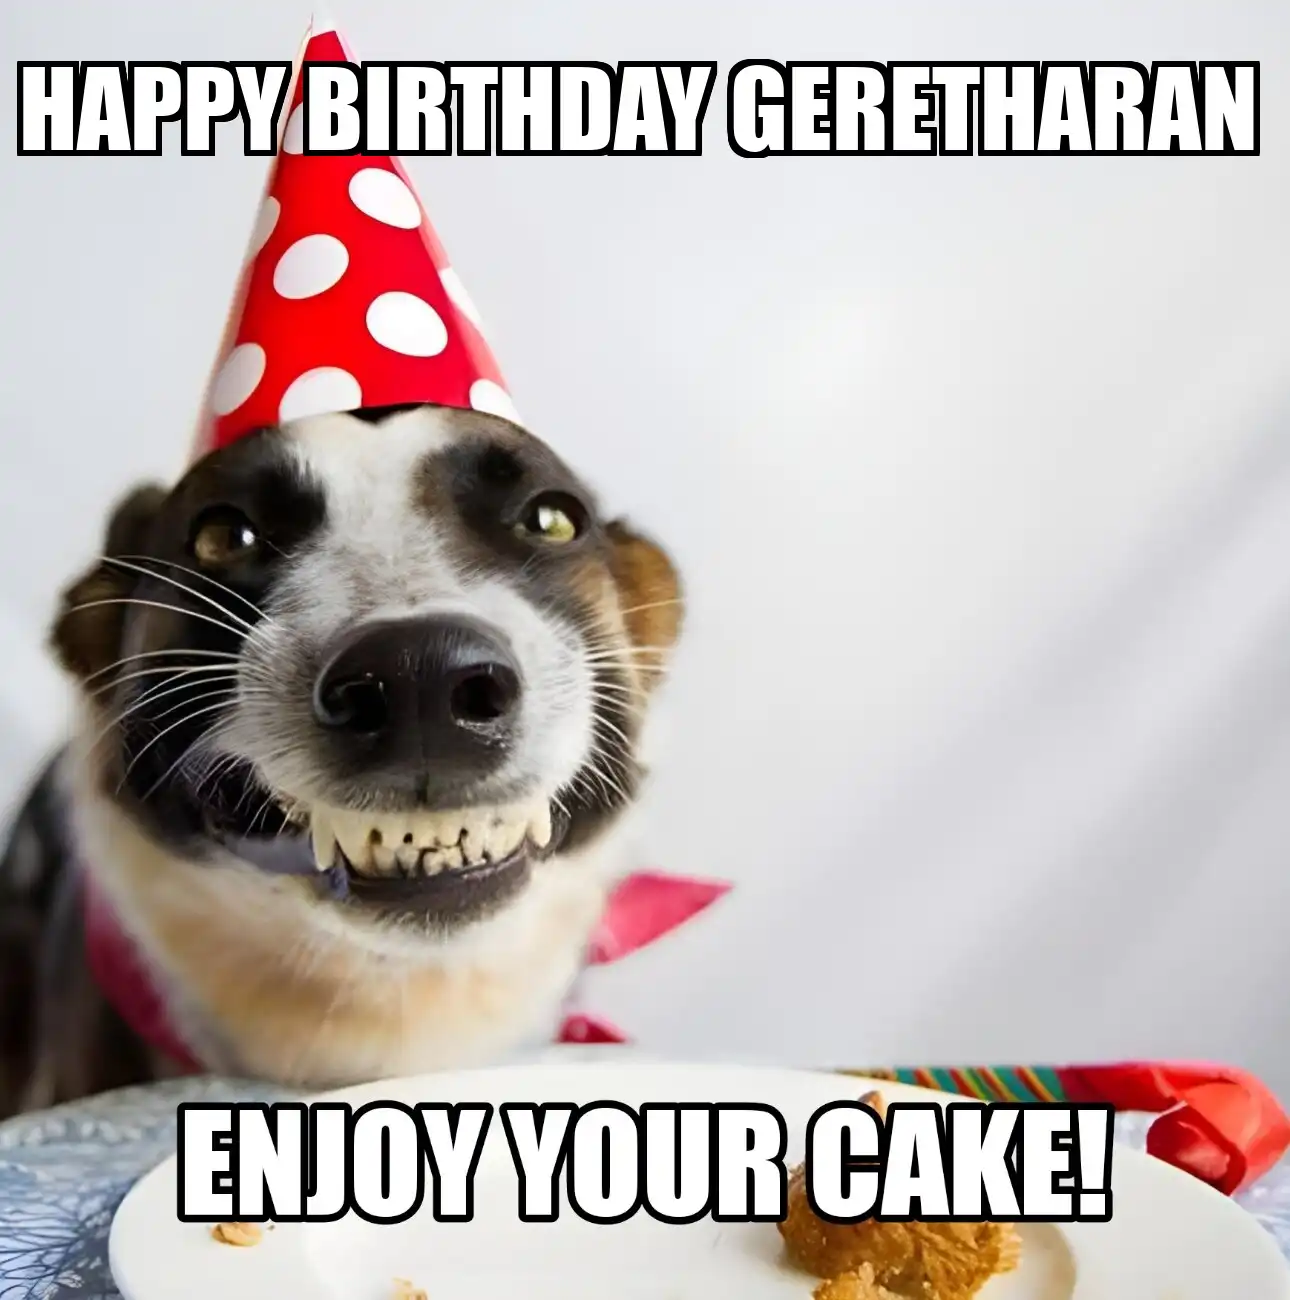 Happy Birthday Geretharan Enjoy Your Cake Dog Meme